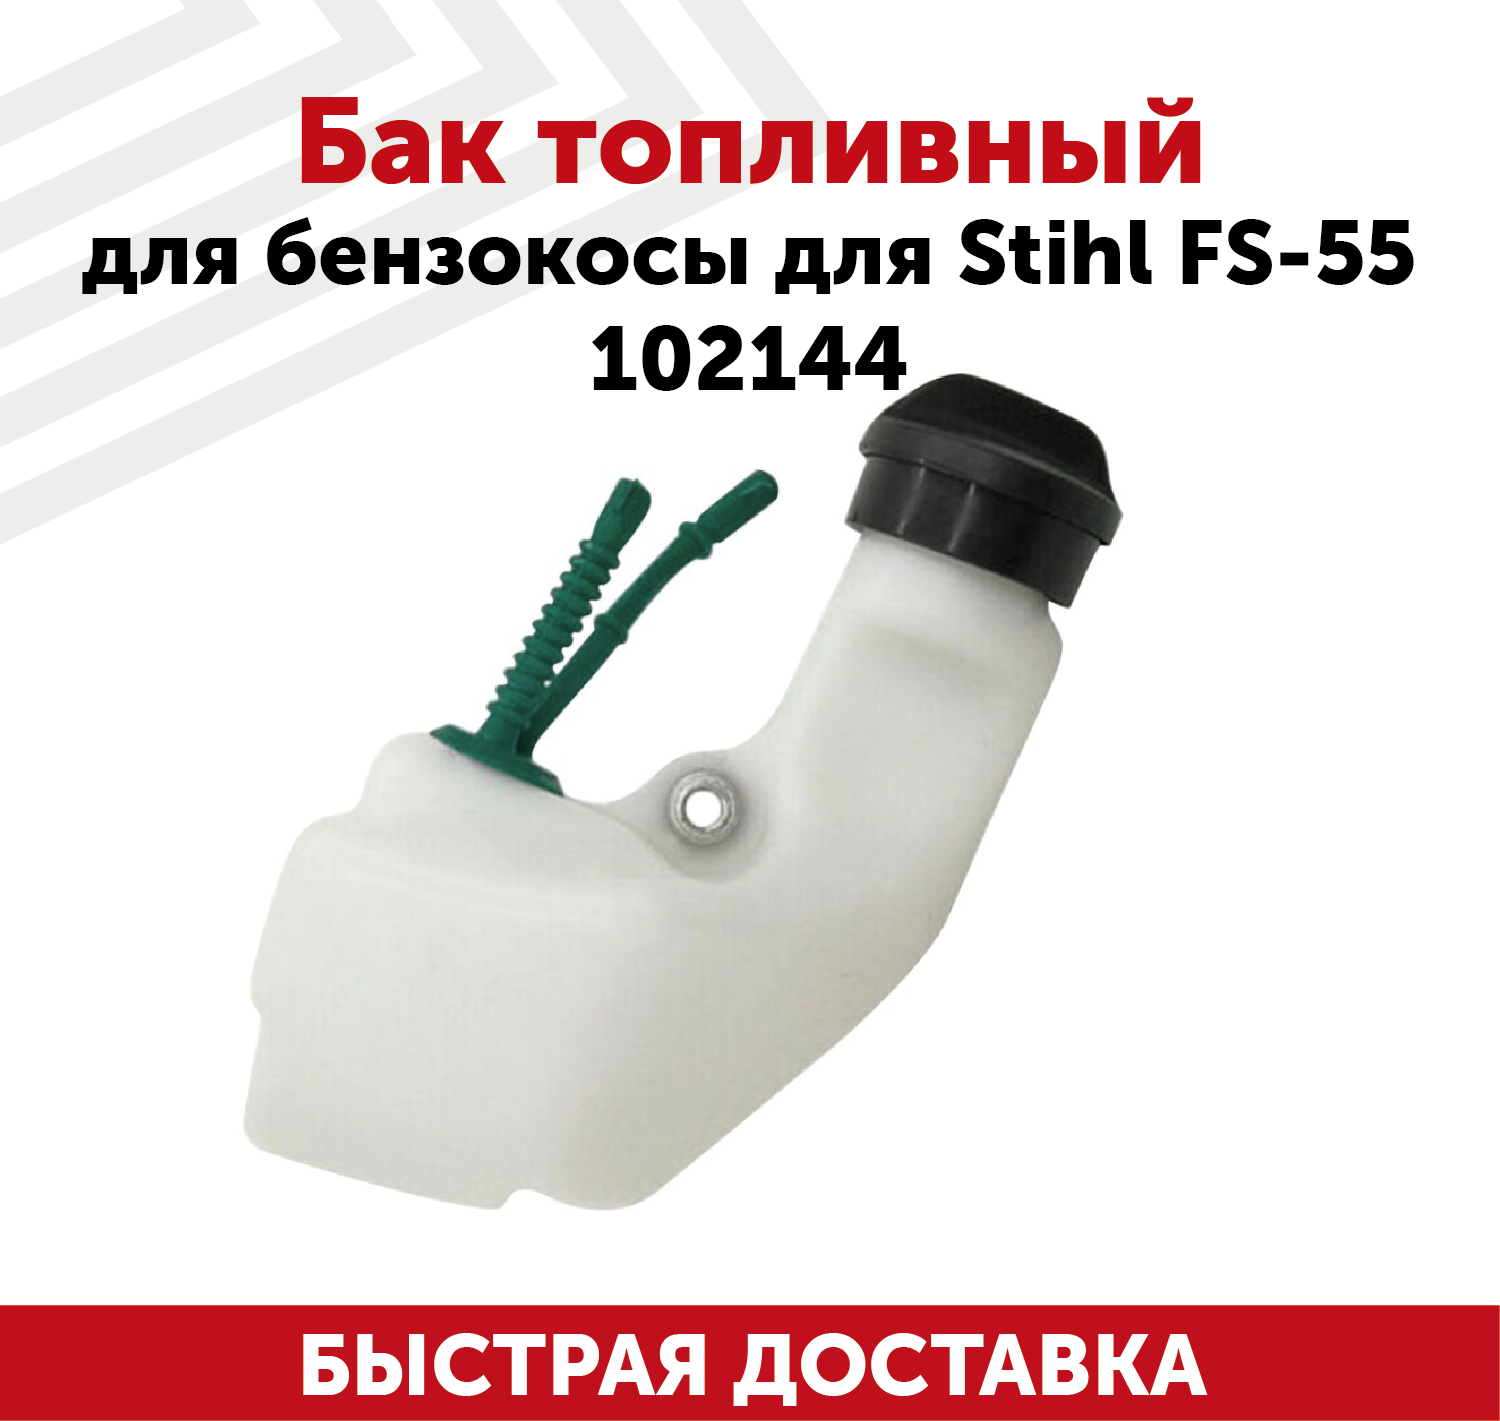 Бак топливный (бензобак) для бензокосы Stihl FS-55 102144